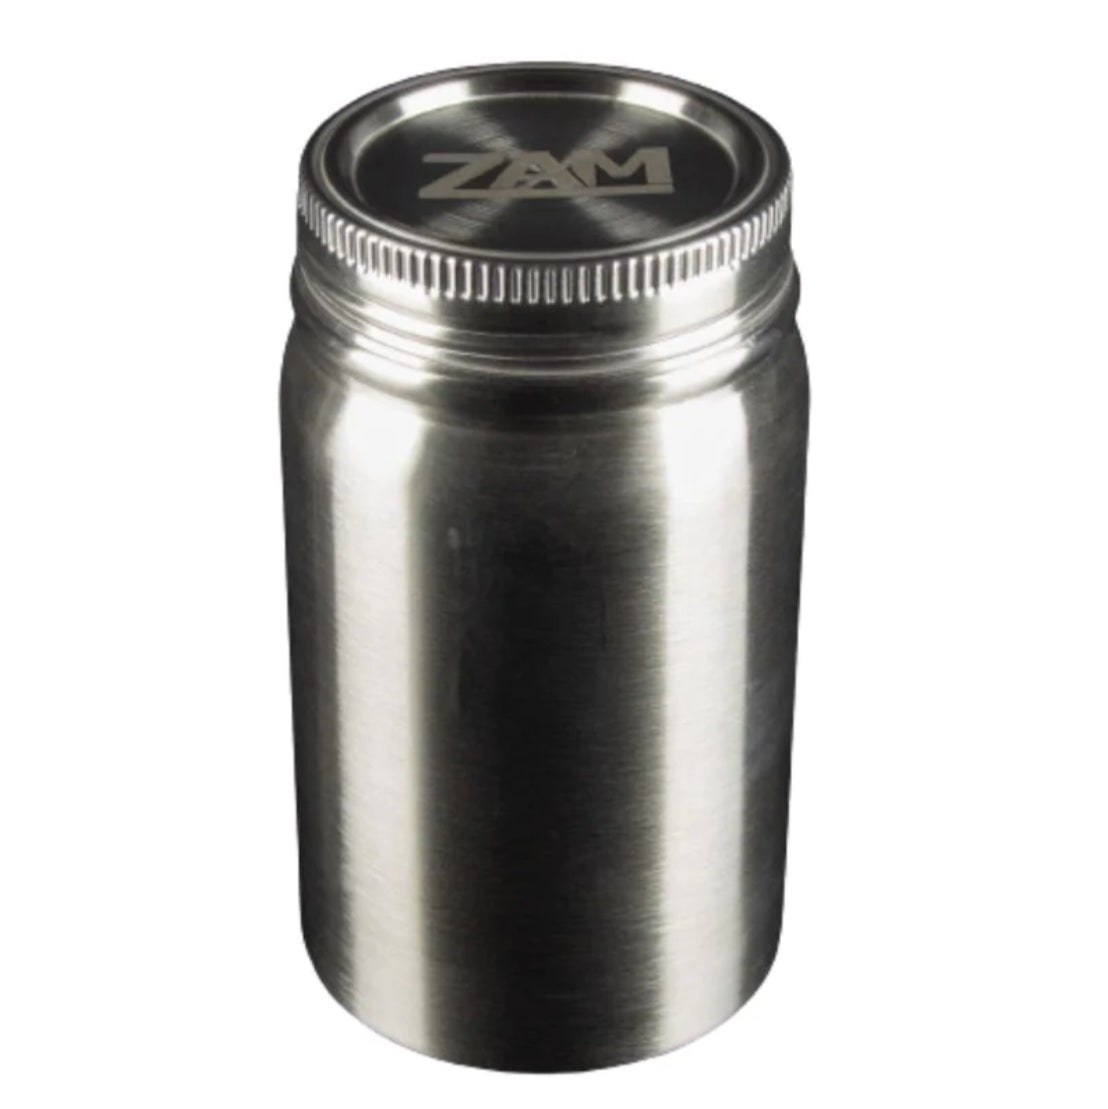 Stainless Steel Mason Jar – ZAM Grinders